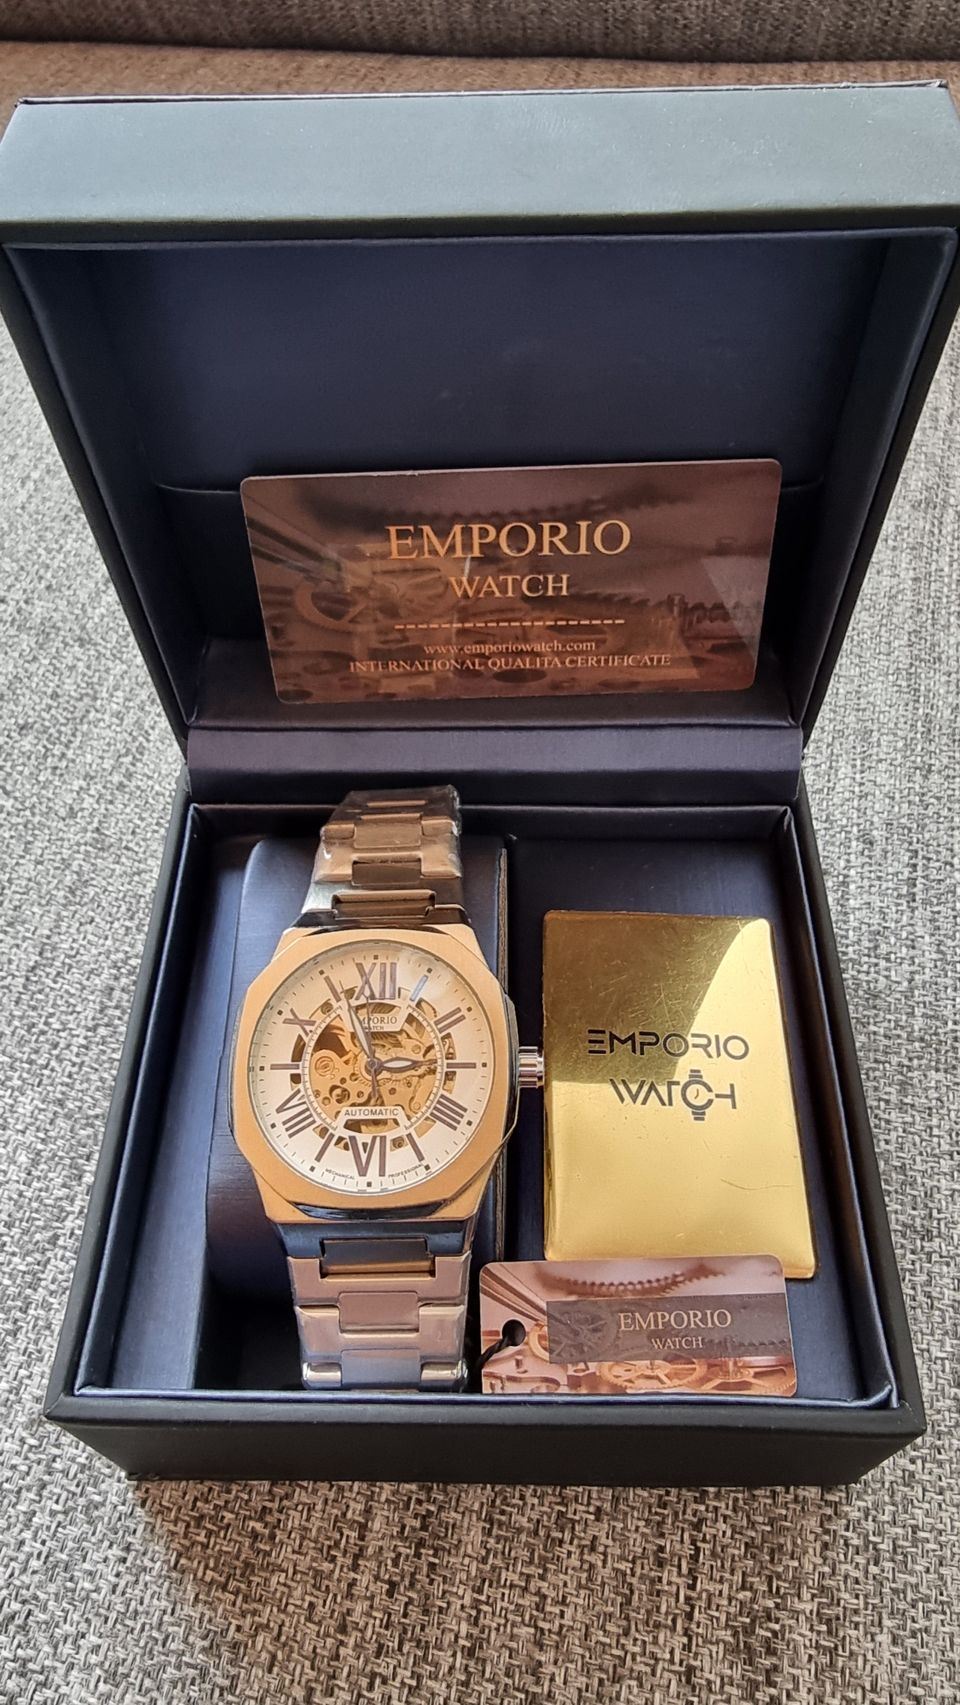 Emporio Watch rannekello.